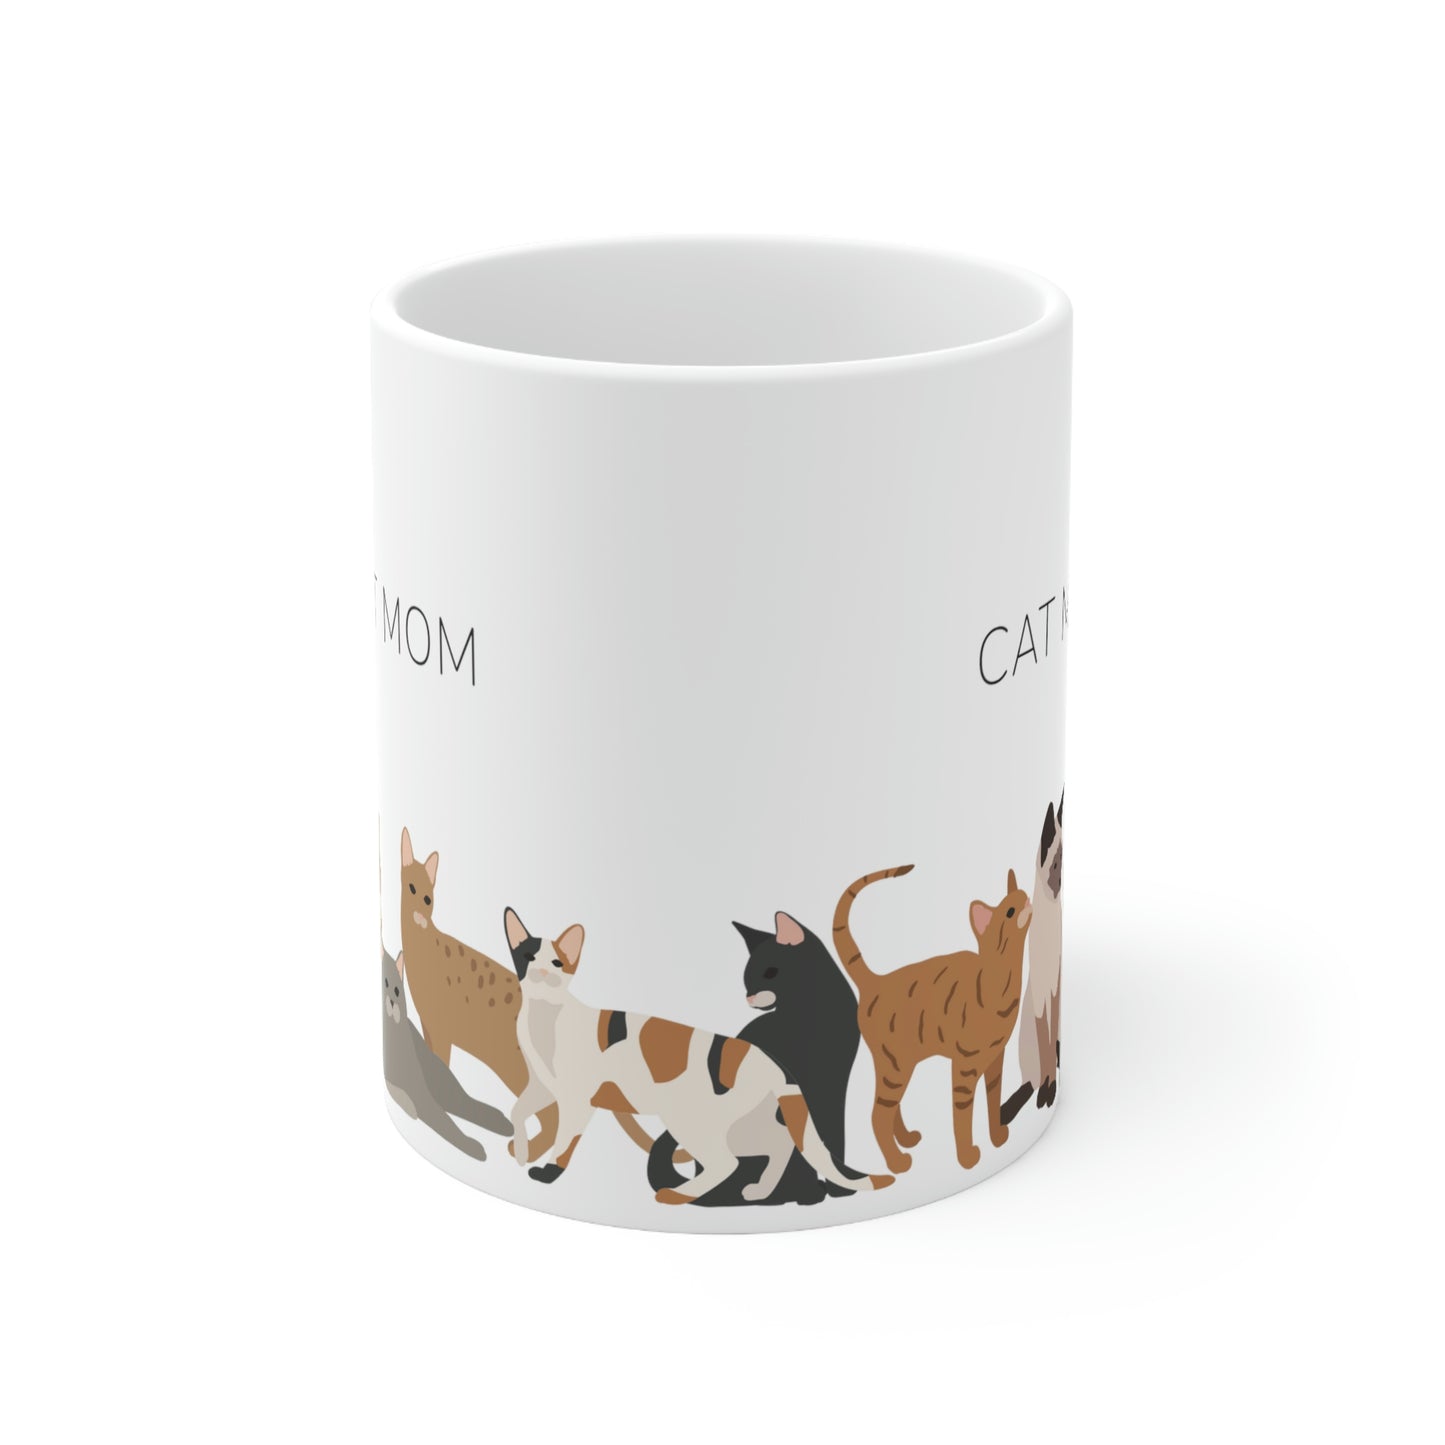 Cat Mom Ceramic Mug 11oz